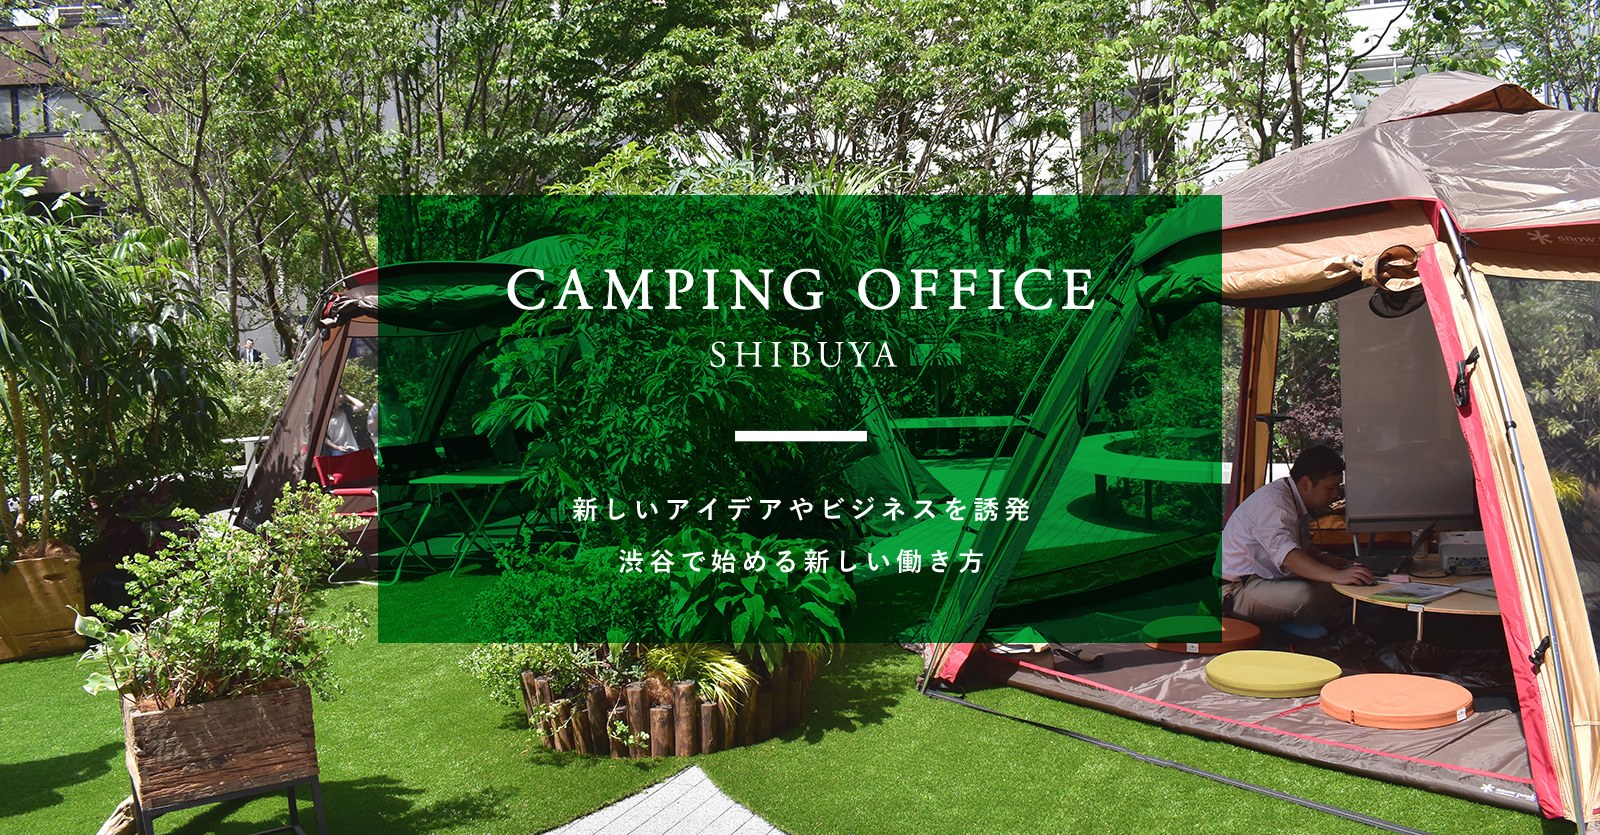 CAMPING OFFICE SHIBUYA 新しいアイデアやビジネスを誘発 渋谷で始める新しい働き方